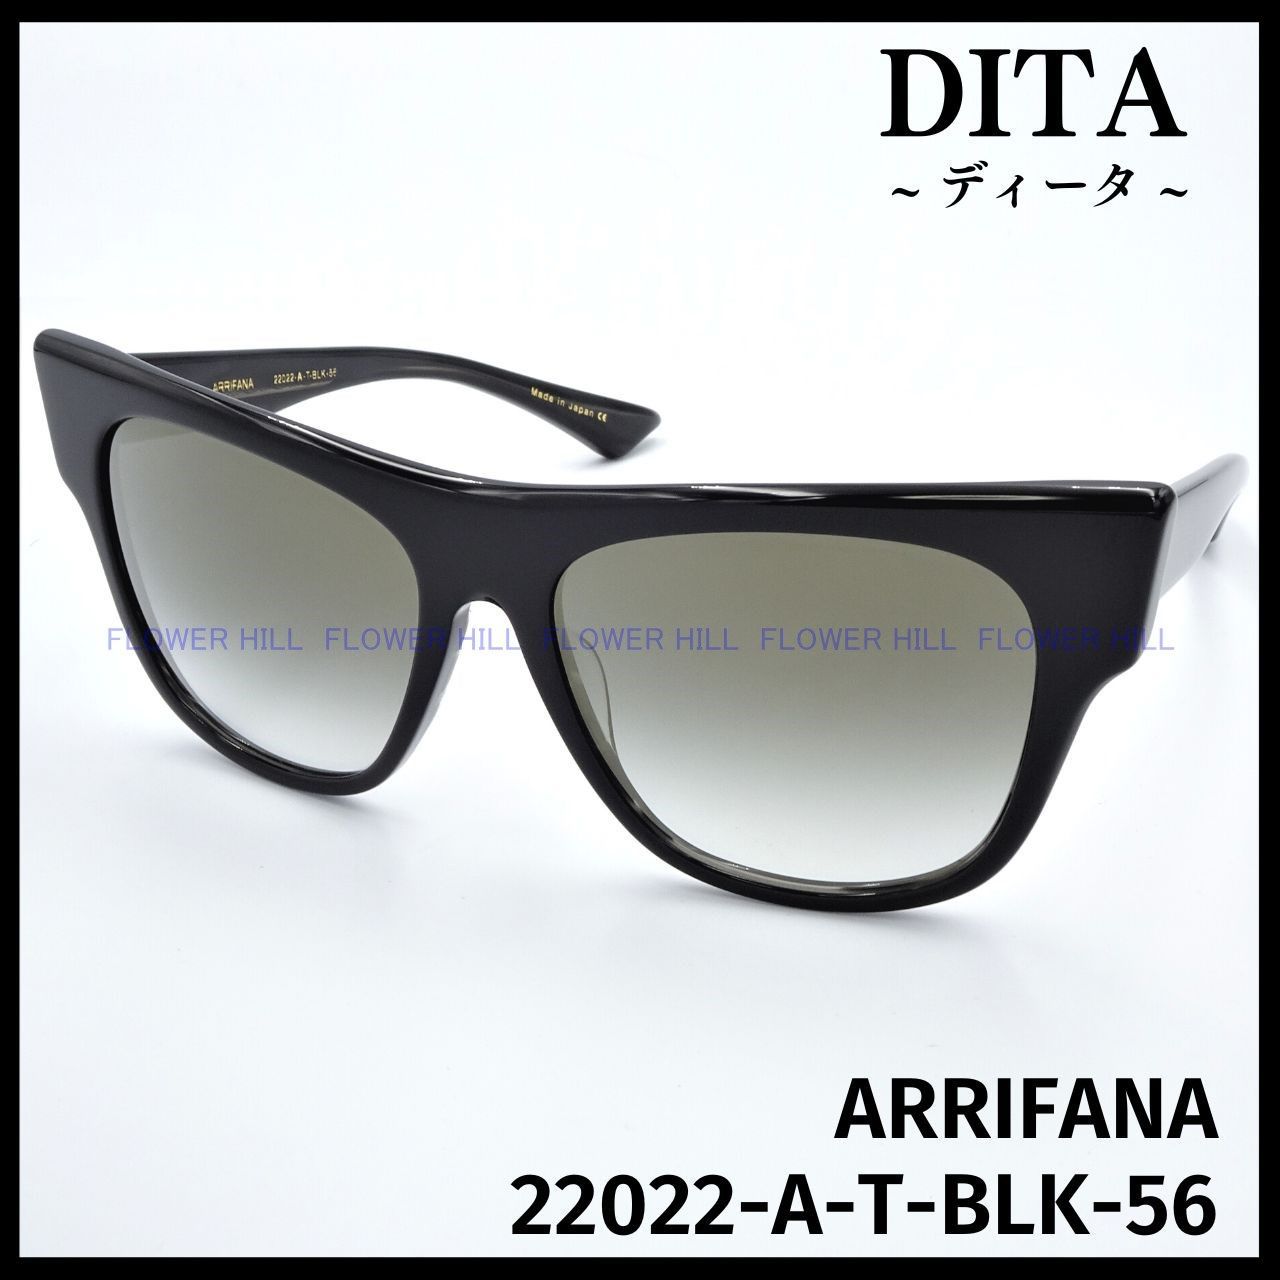 DITAディータモデルDITA ディータ サングラス ARRIFANA 22022-A-T-BLK